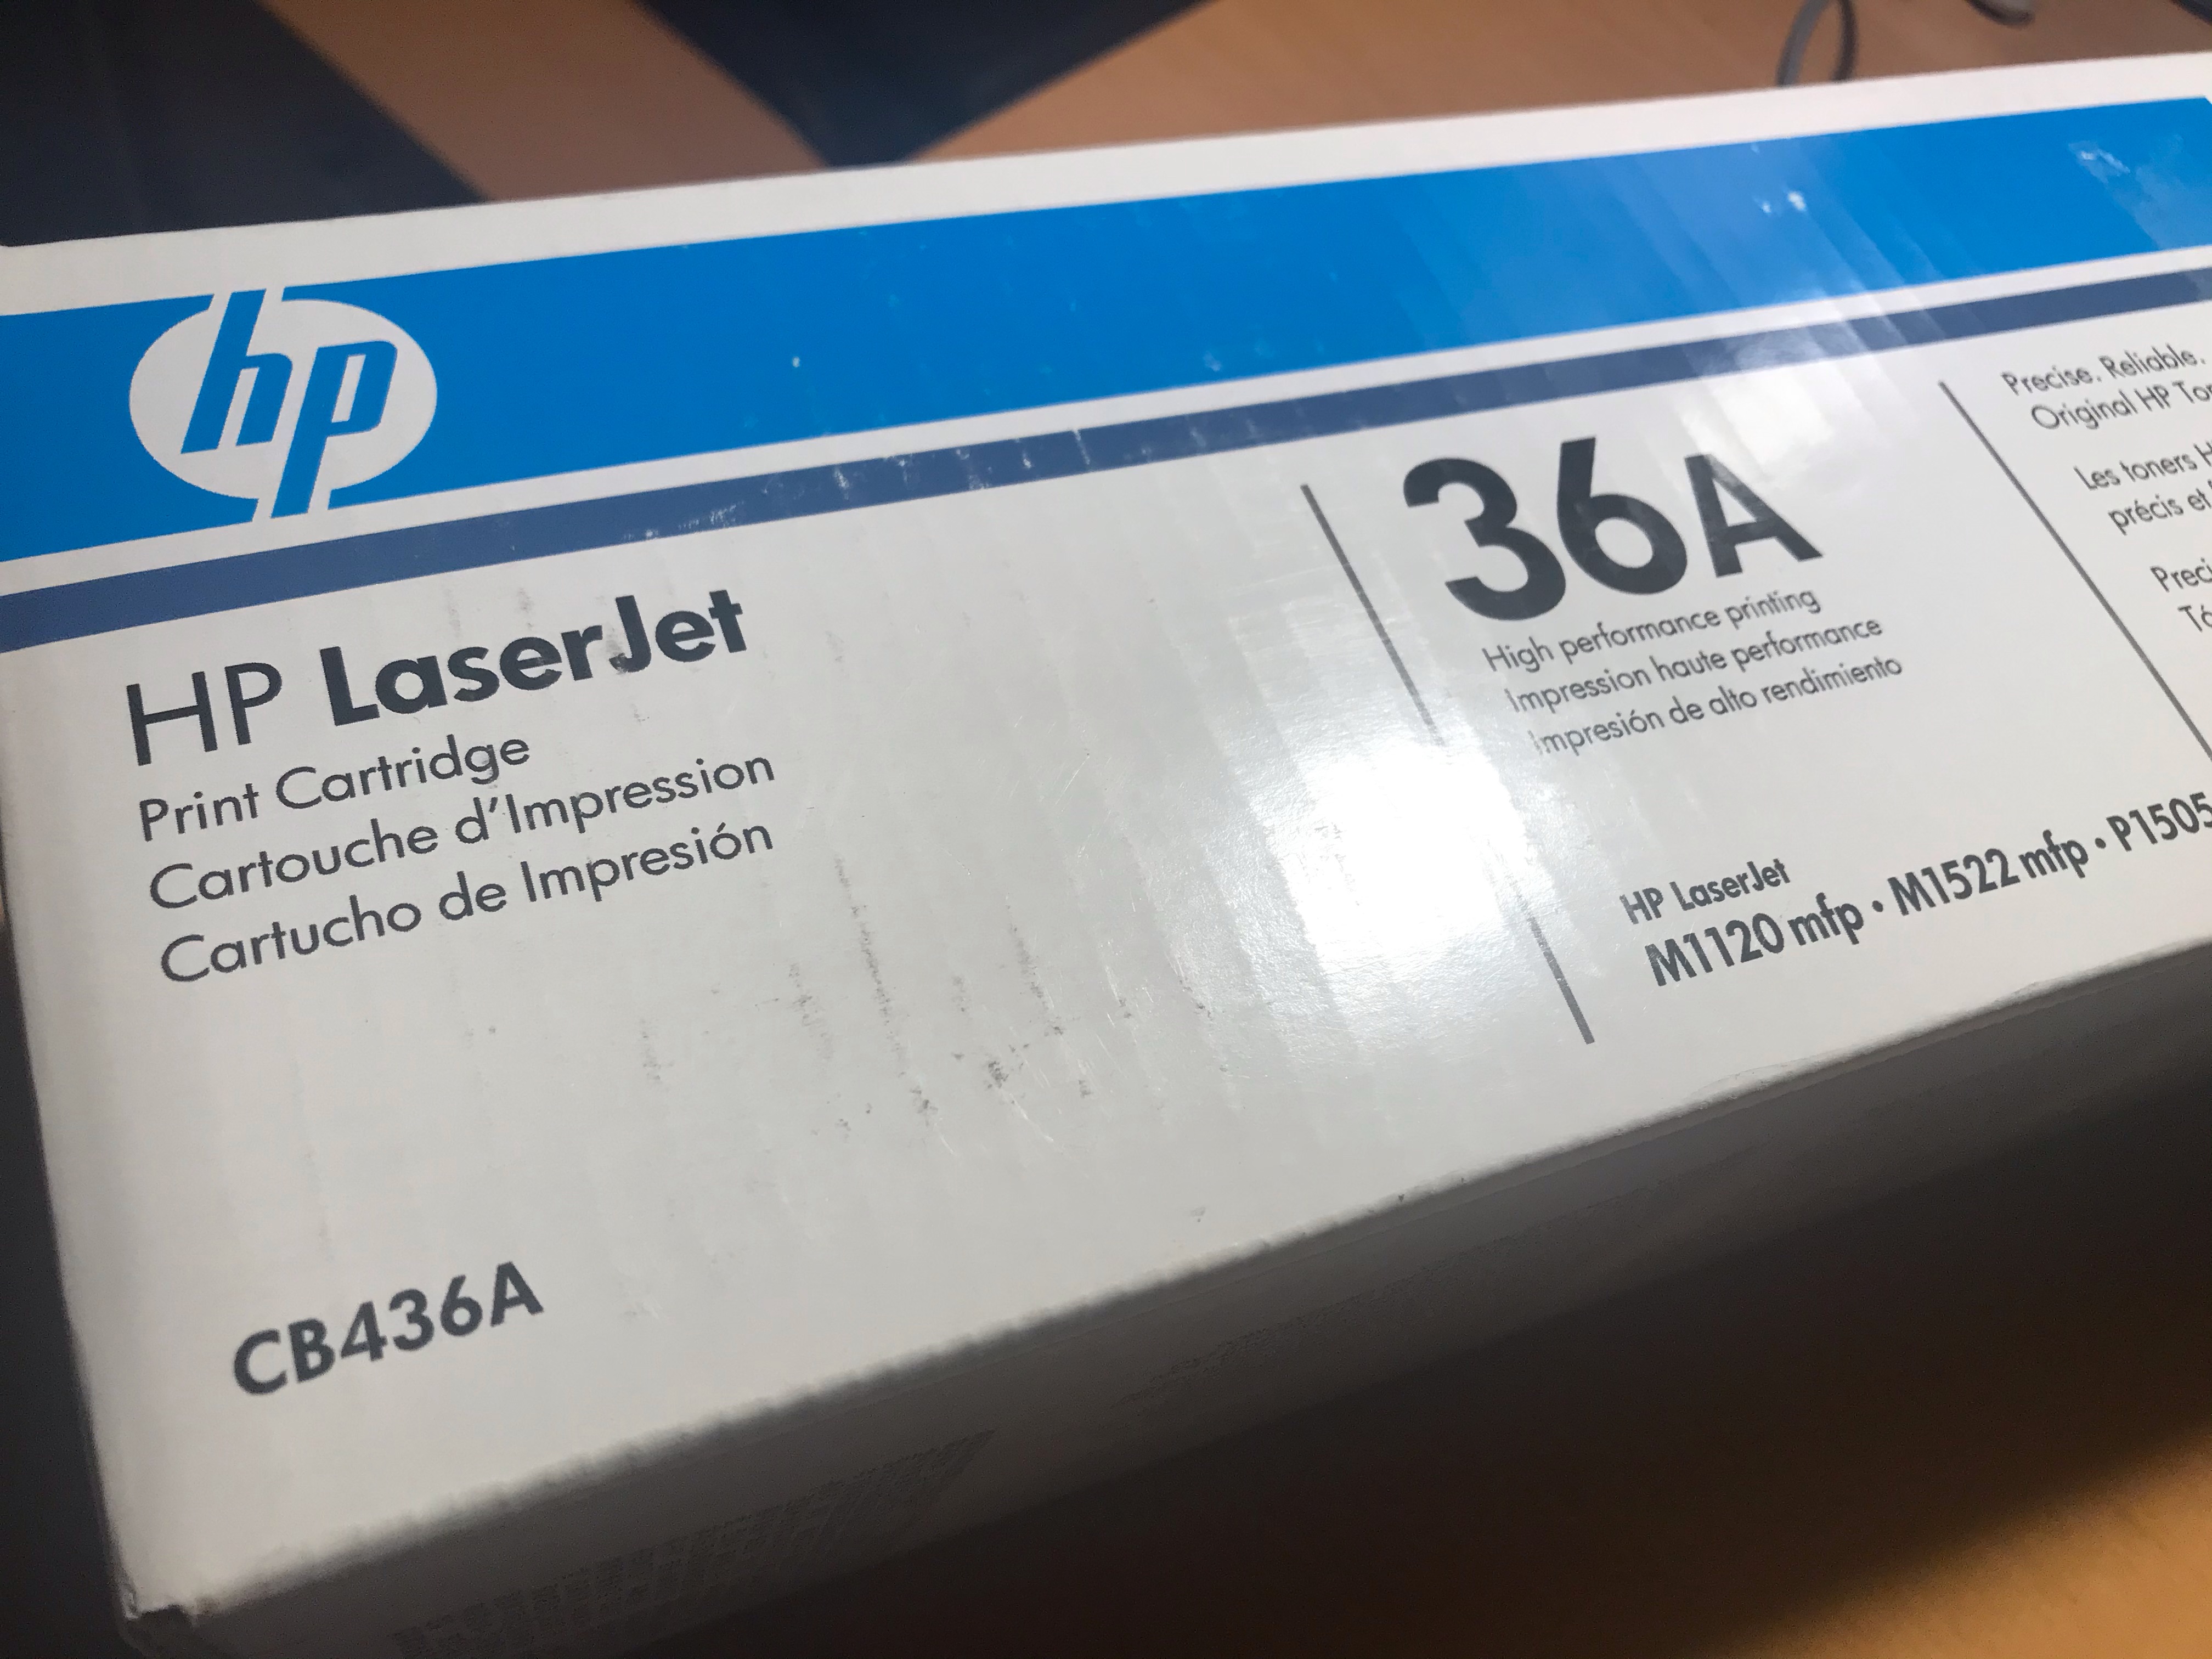  HP 36A Black Toner Cartridges (2-pack), Works with HP LaserJet  M1120 MFP Series, HP LaserJet M1522 MFP Series, HP LaserJet P1505 Series